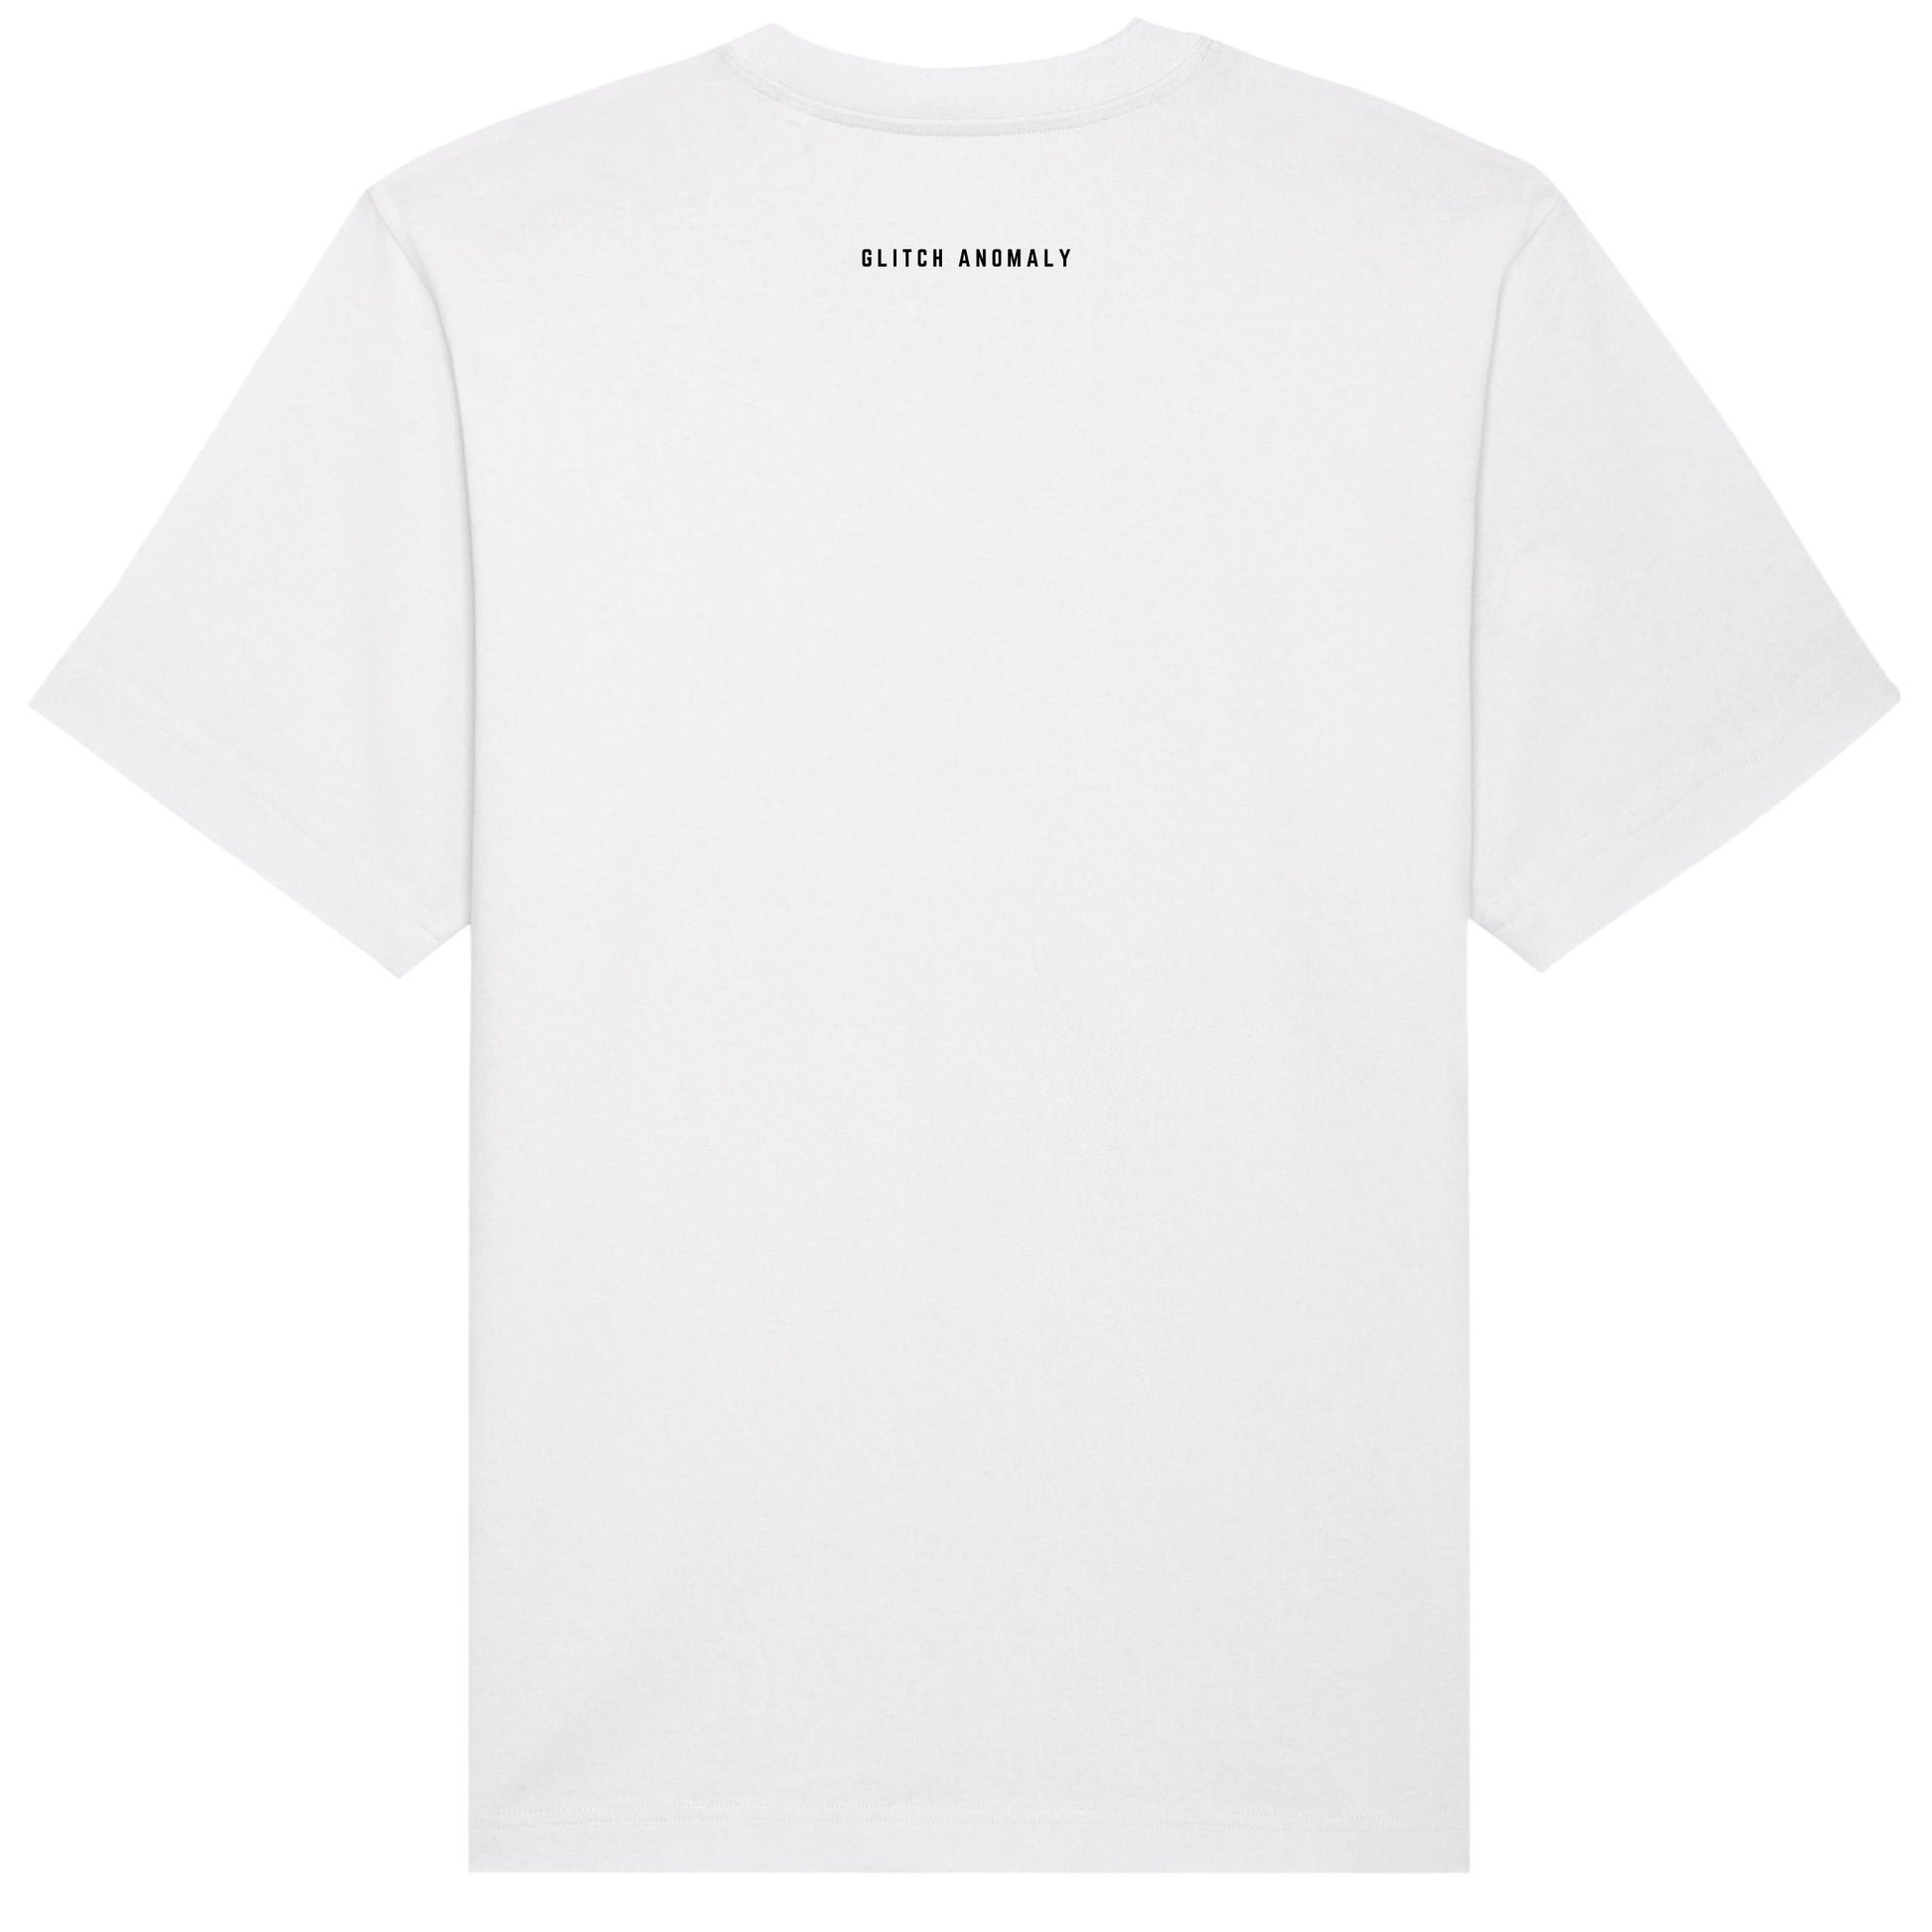 Bio-Degradable T-Shirt – Glitch Anomaly